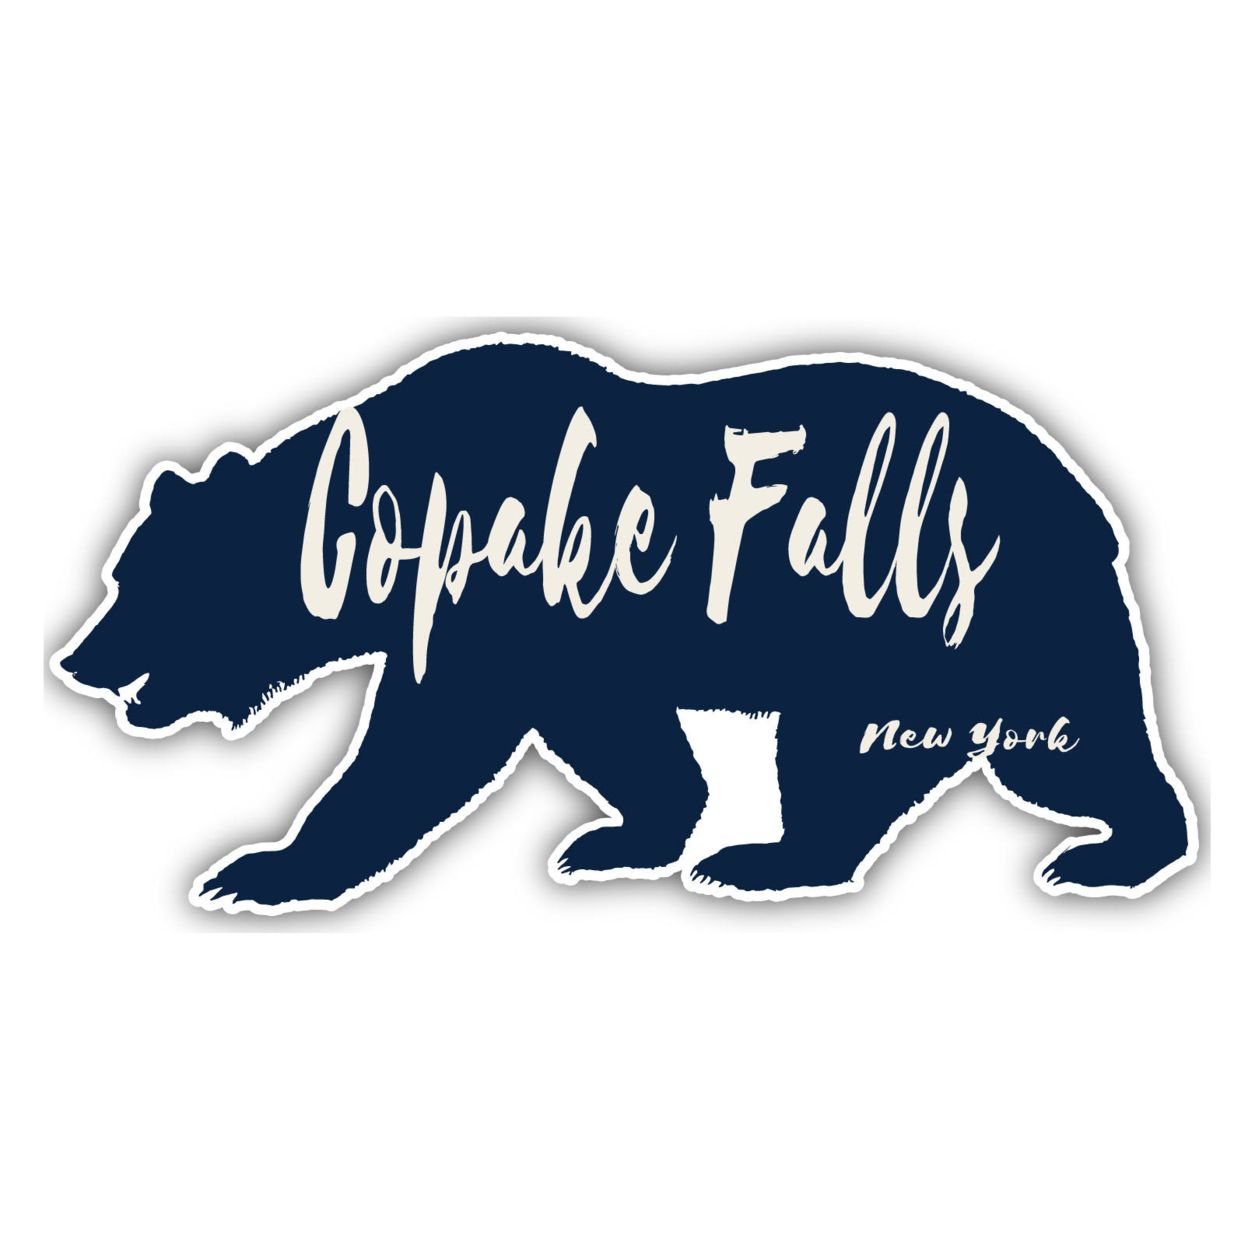 Copake Falls New York Souvenir Decorative Stickers (Choose Theme And Size) - Single Unit, 6-Inch, Bear